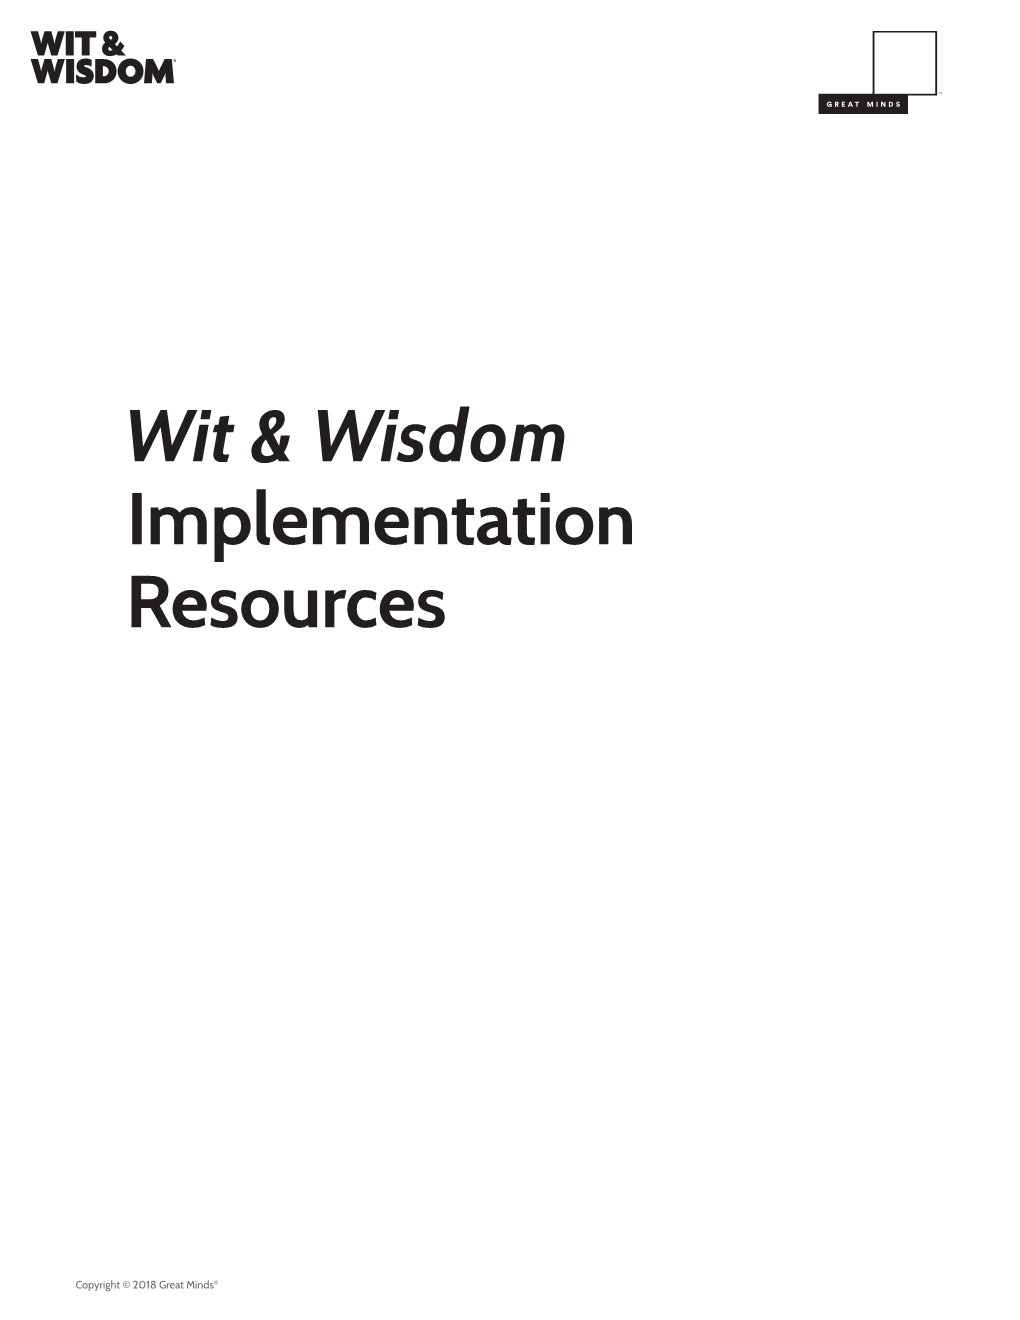 Wit & Wisdom Implementation Resources